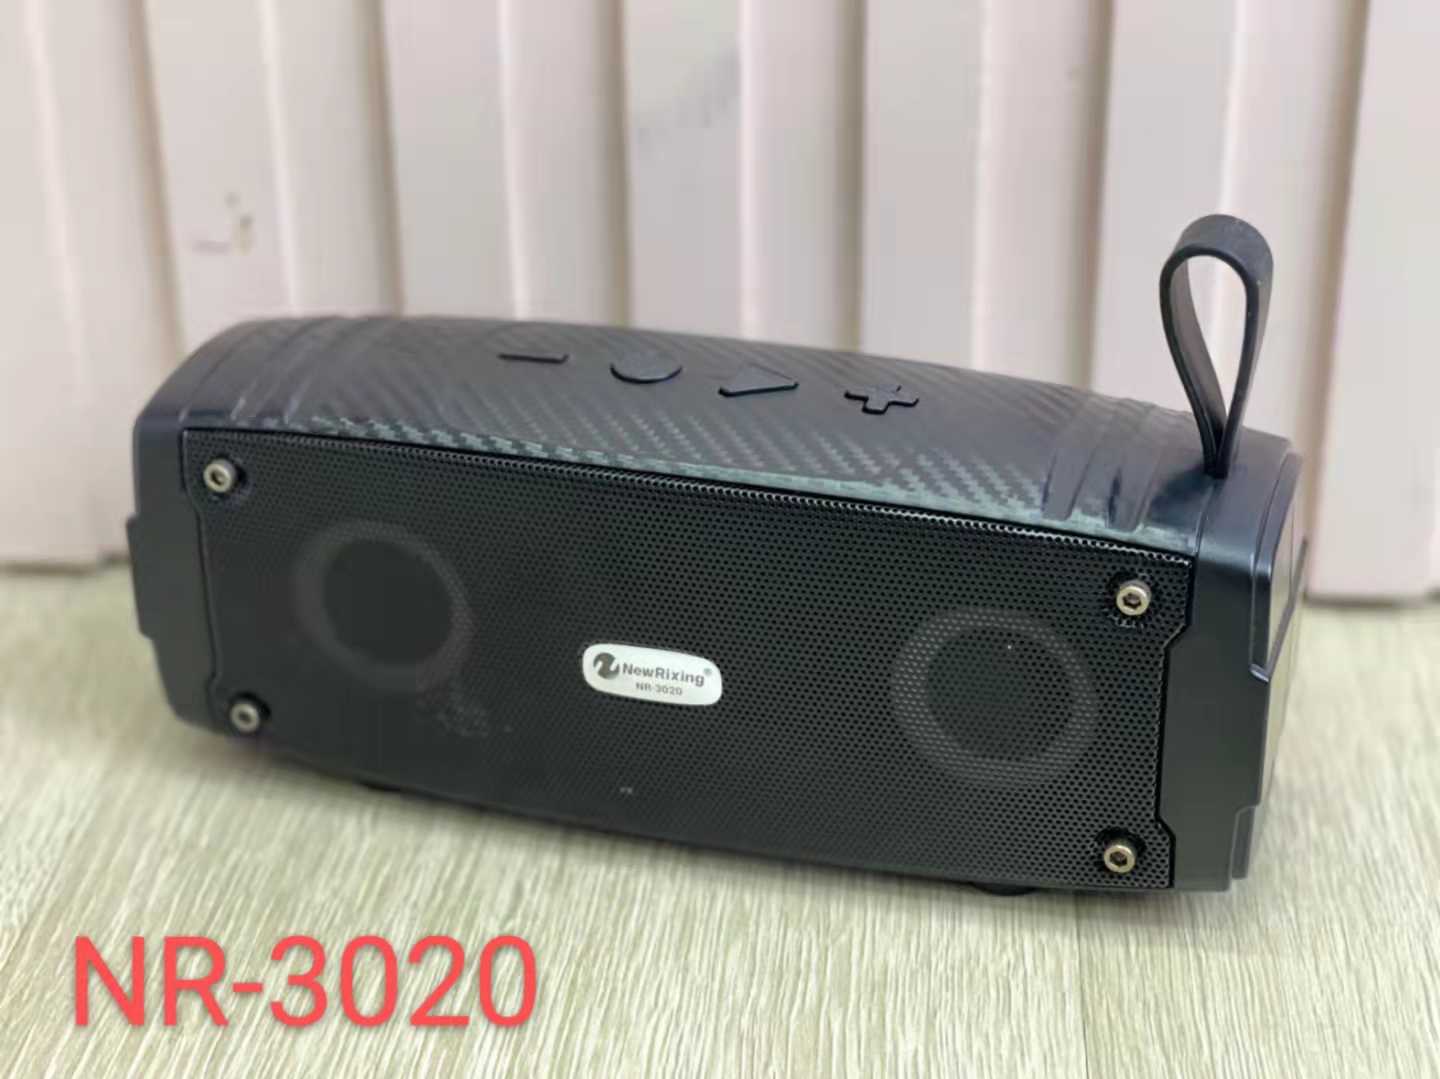 Wireless Bluetooth speaker - NR3020 - 930203 - Black